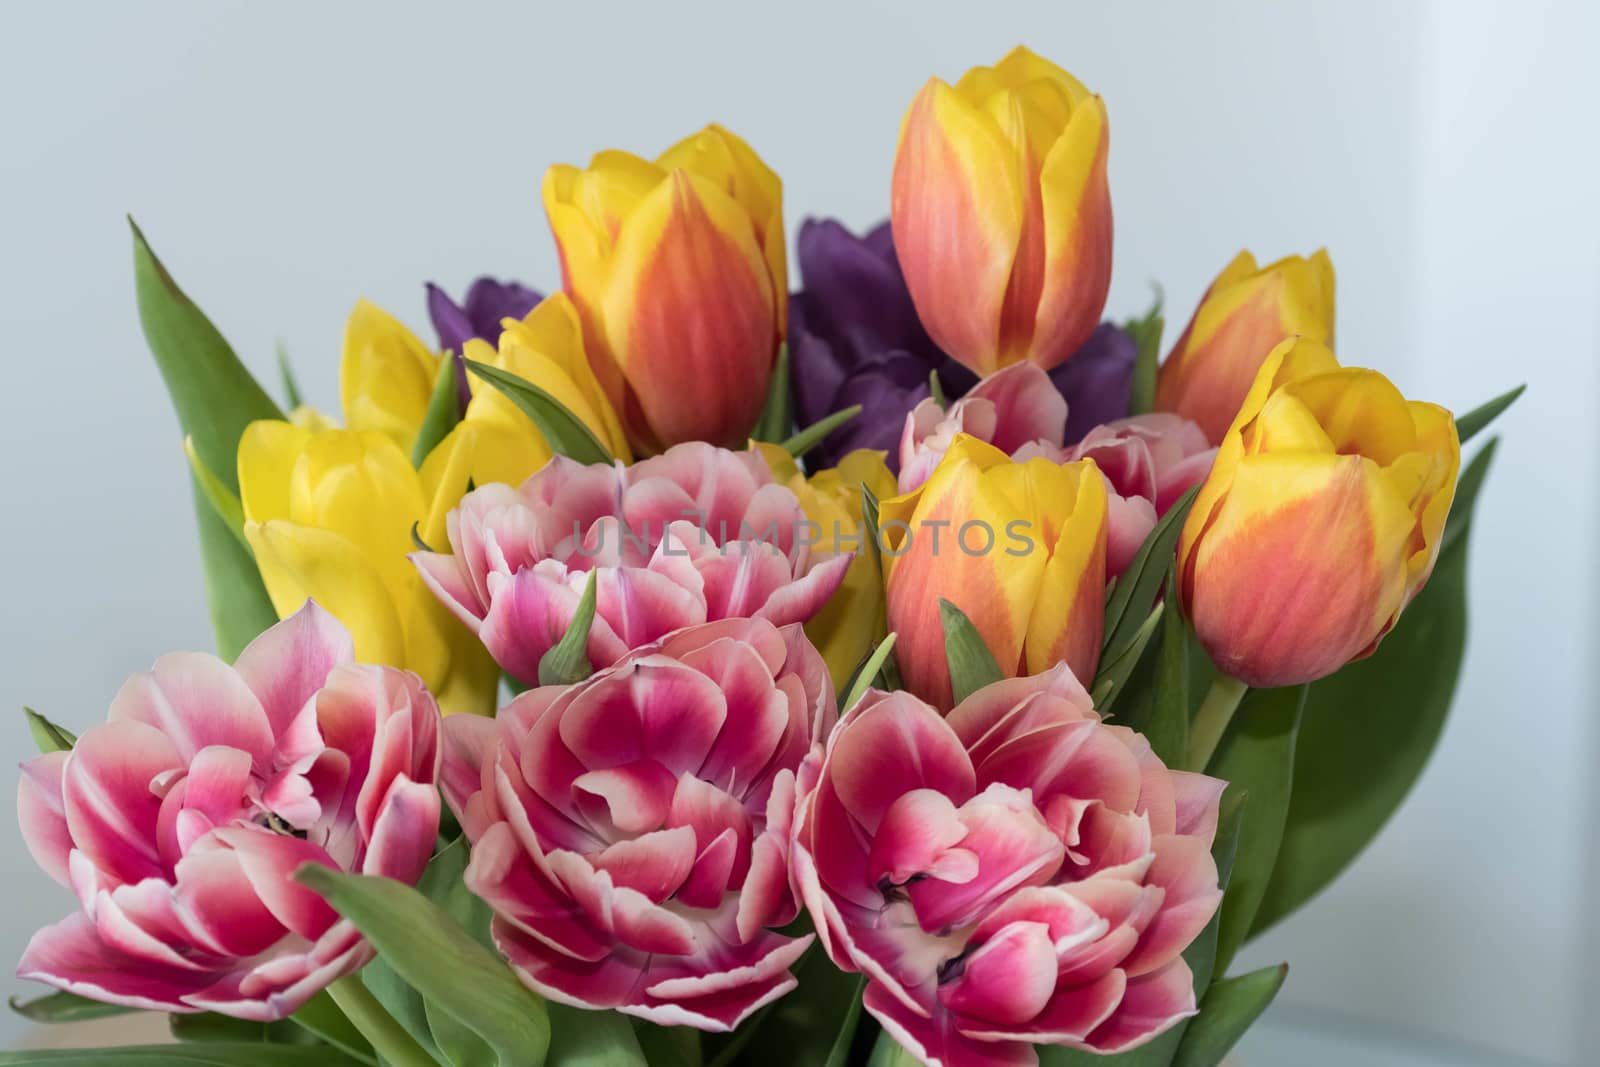 Spring tulips by riverheron_photos